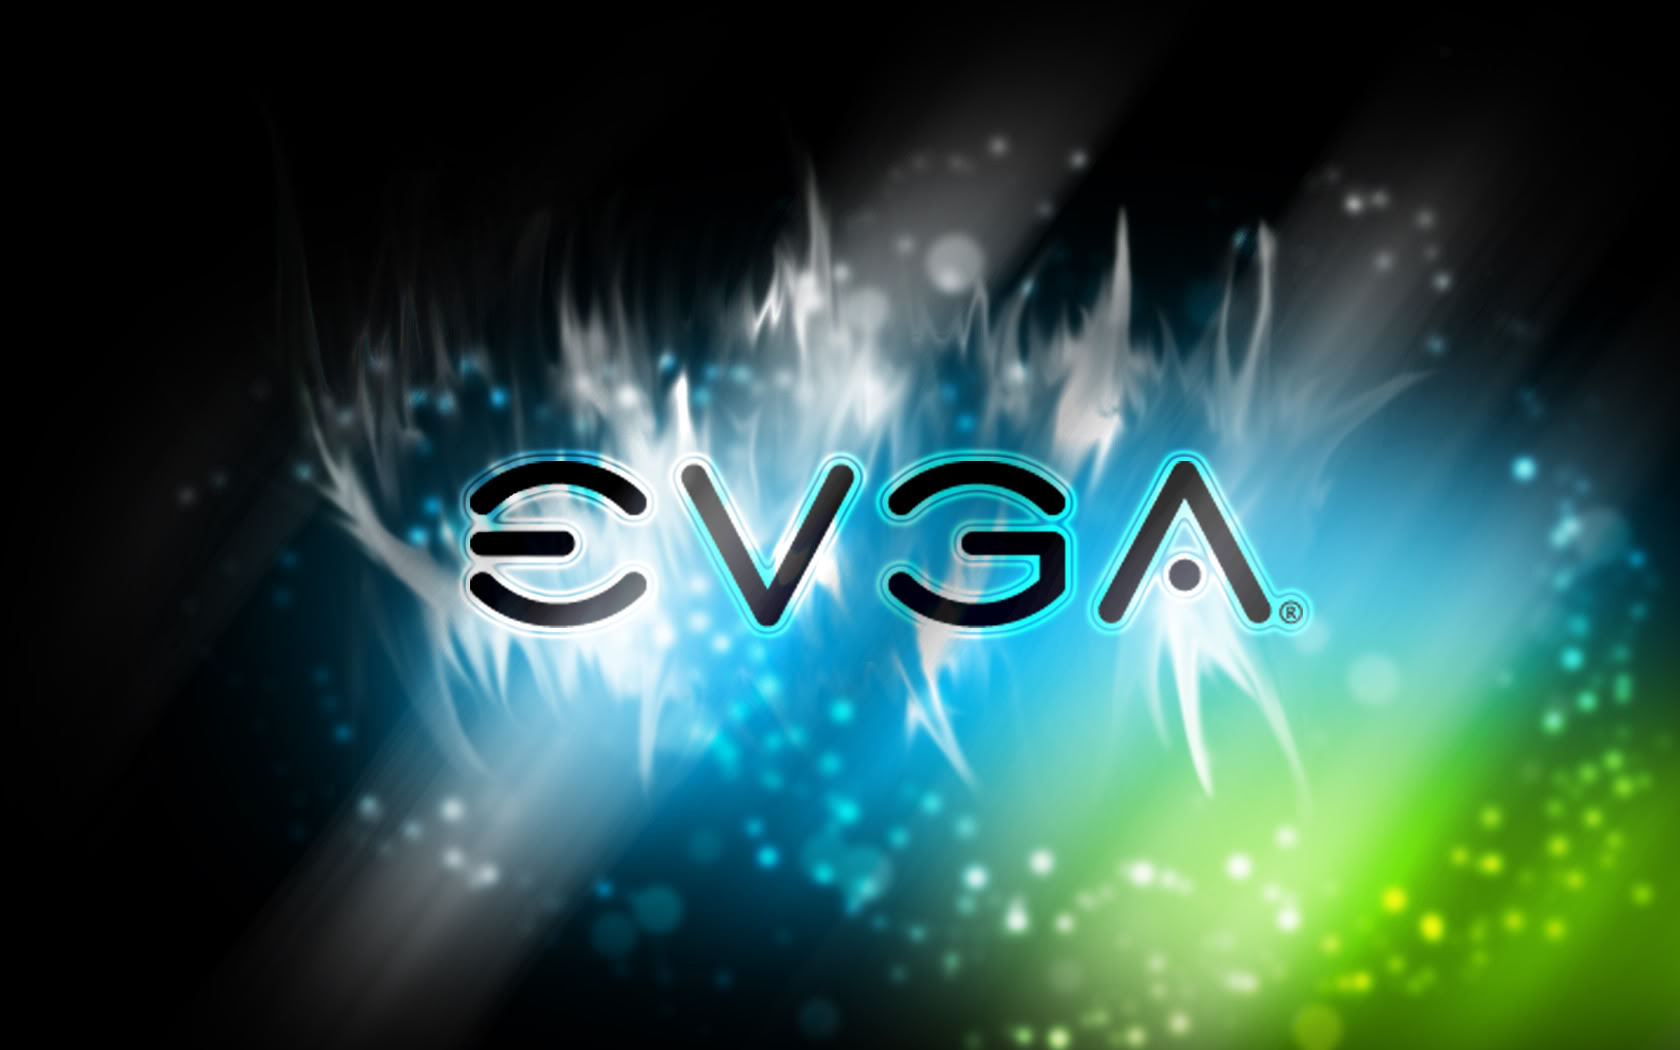 Nvidia Evga Wallpaper